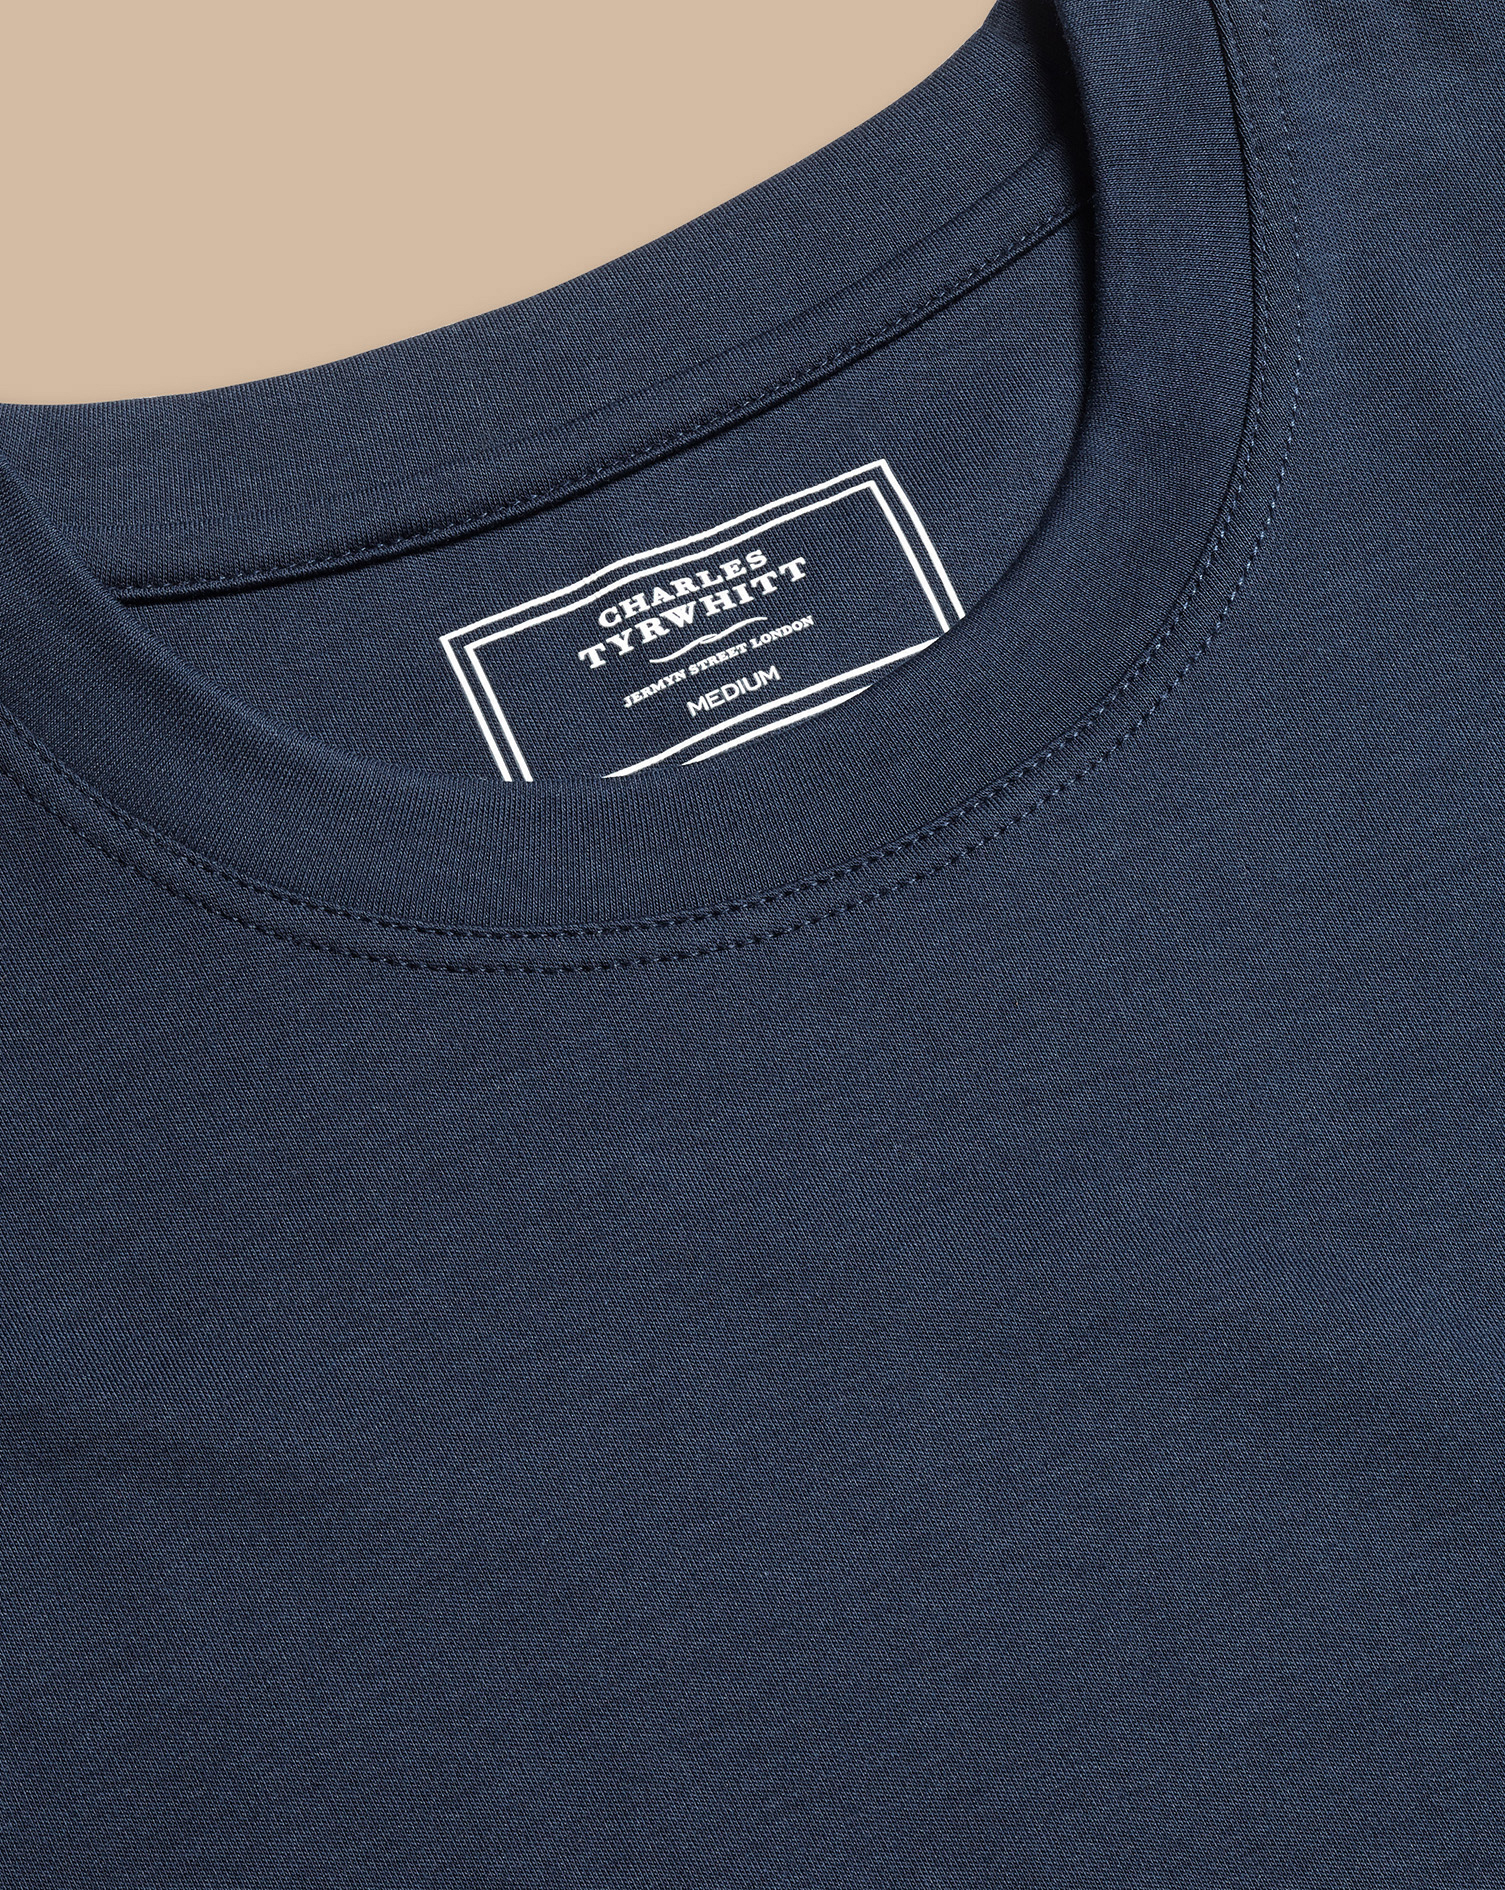 Men's Charles Tyrwhitt T-Shirt - Navy Blue Size Medium Cotton
